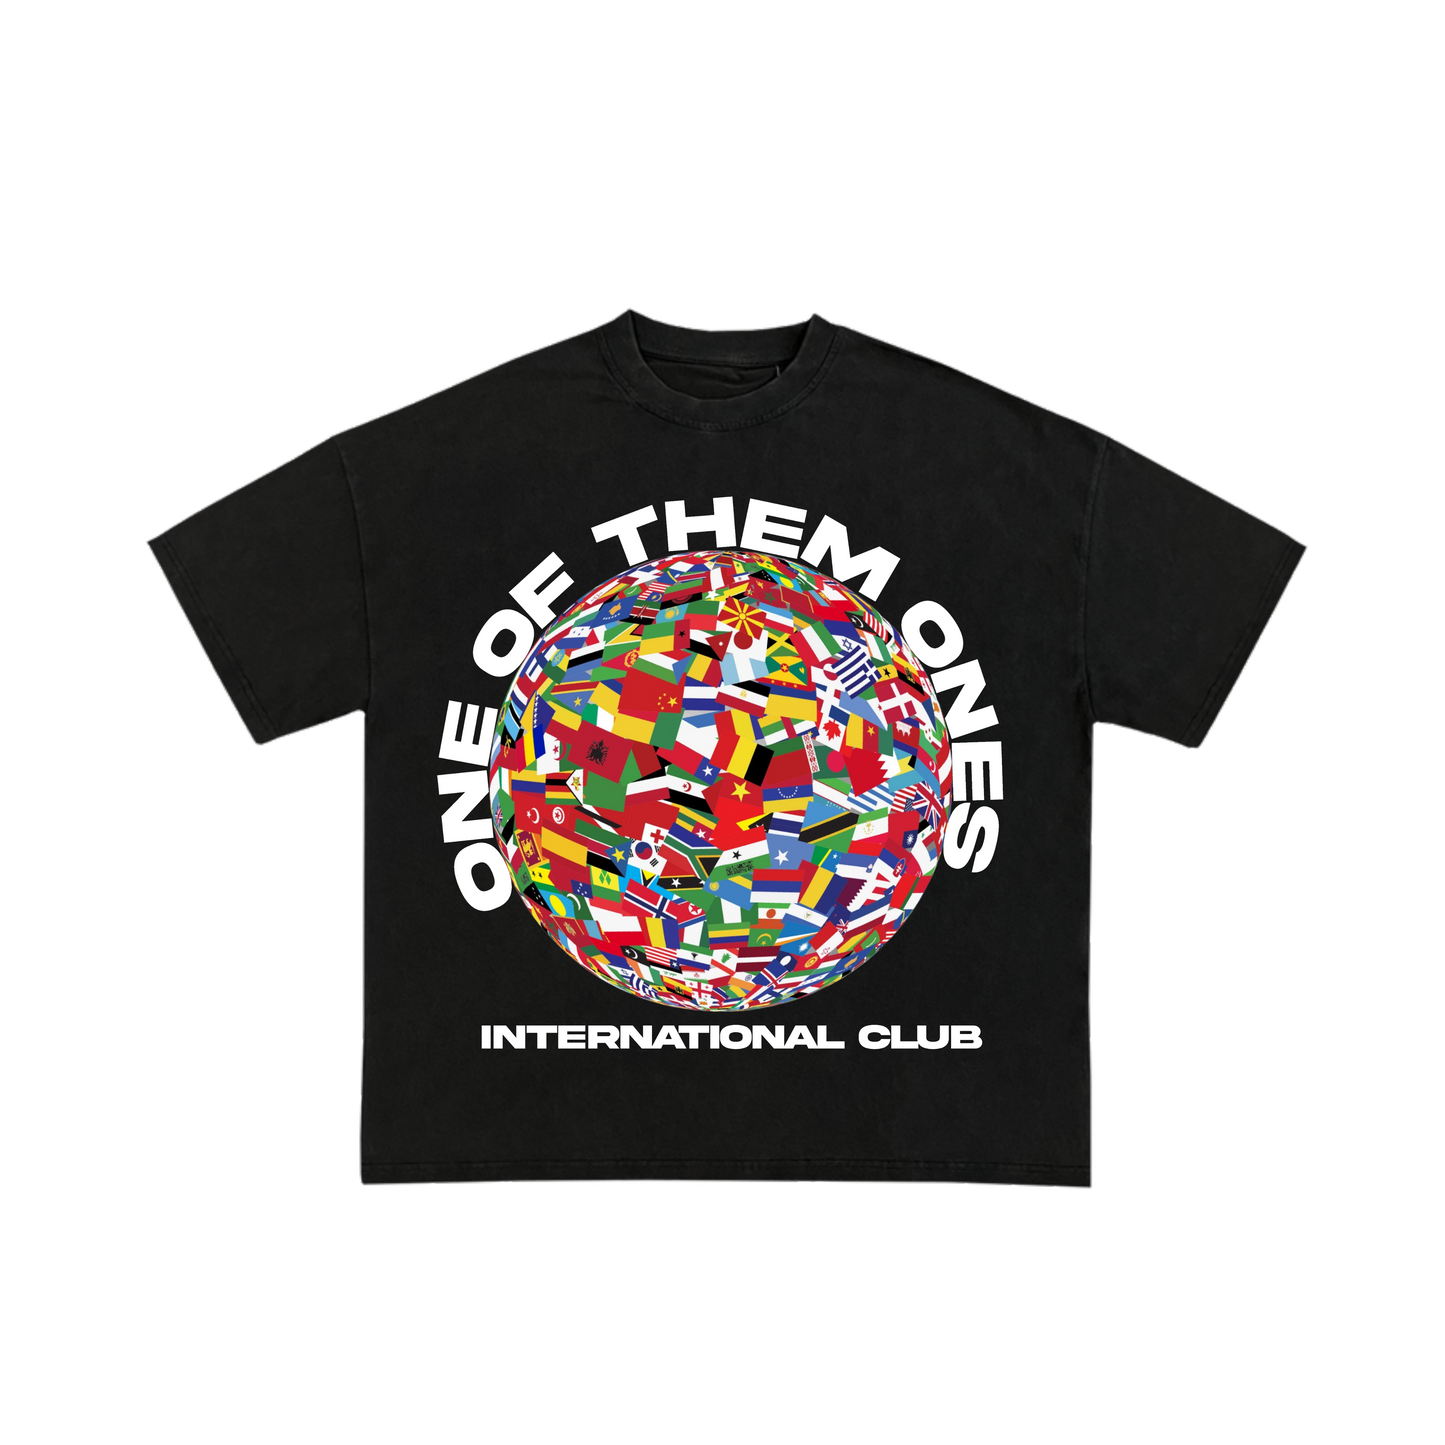 Organik Lyfestyle - 1OFTHEM1's International Club - Black T-Shirt